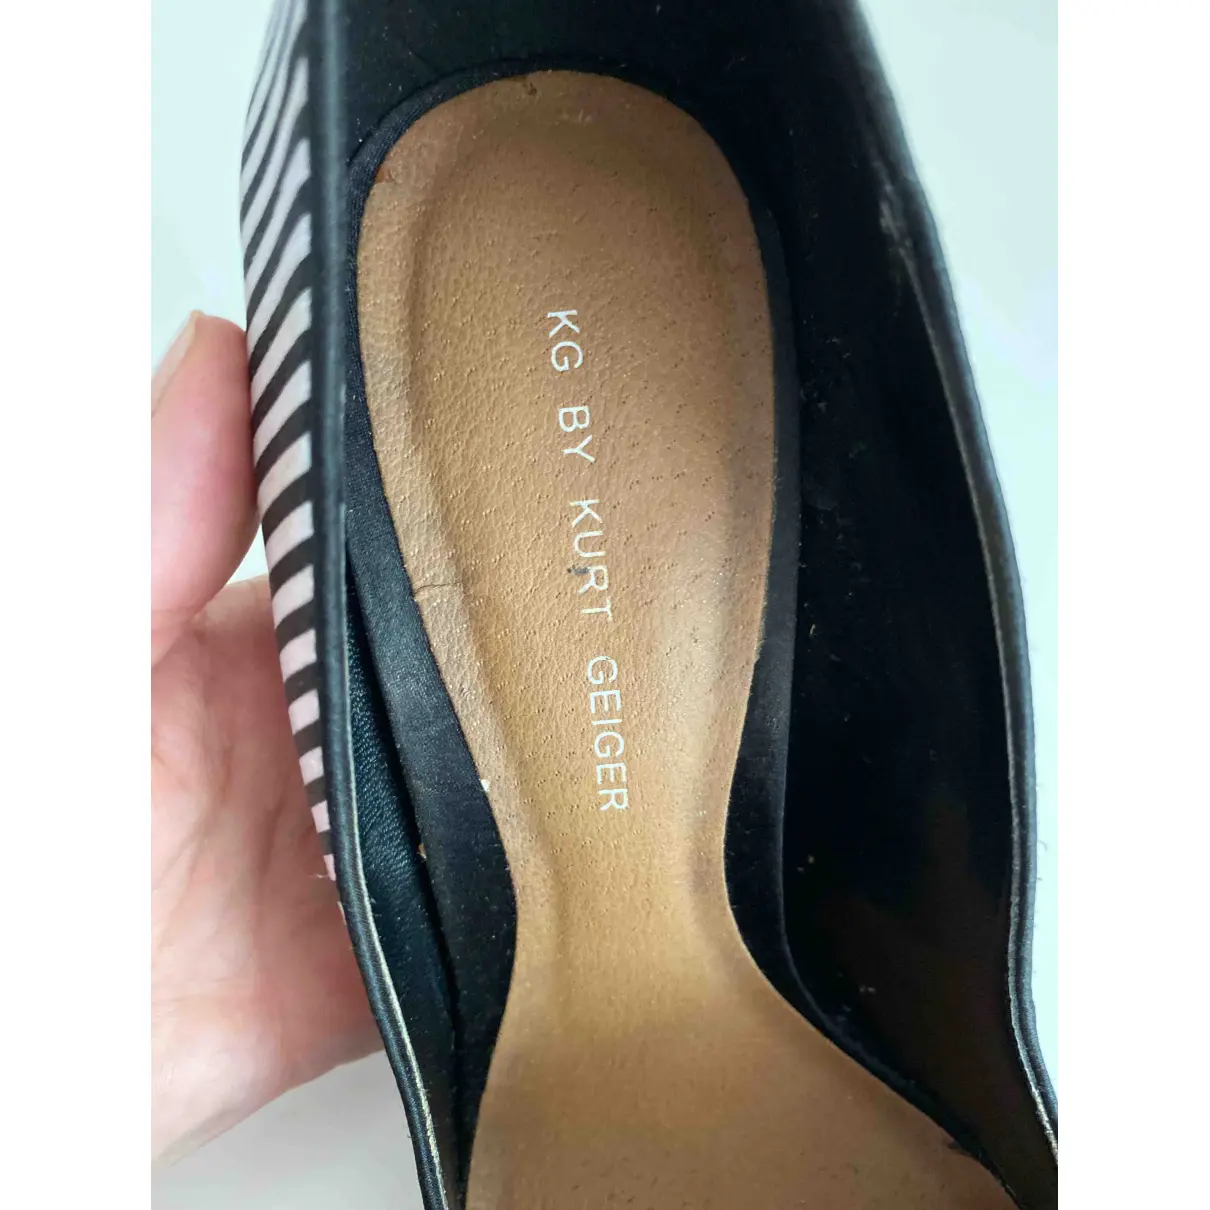 Cloth heels Kurt Geiger